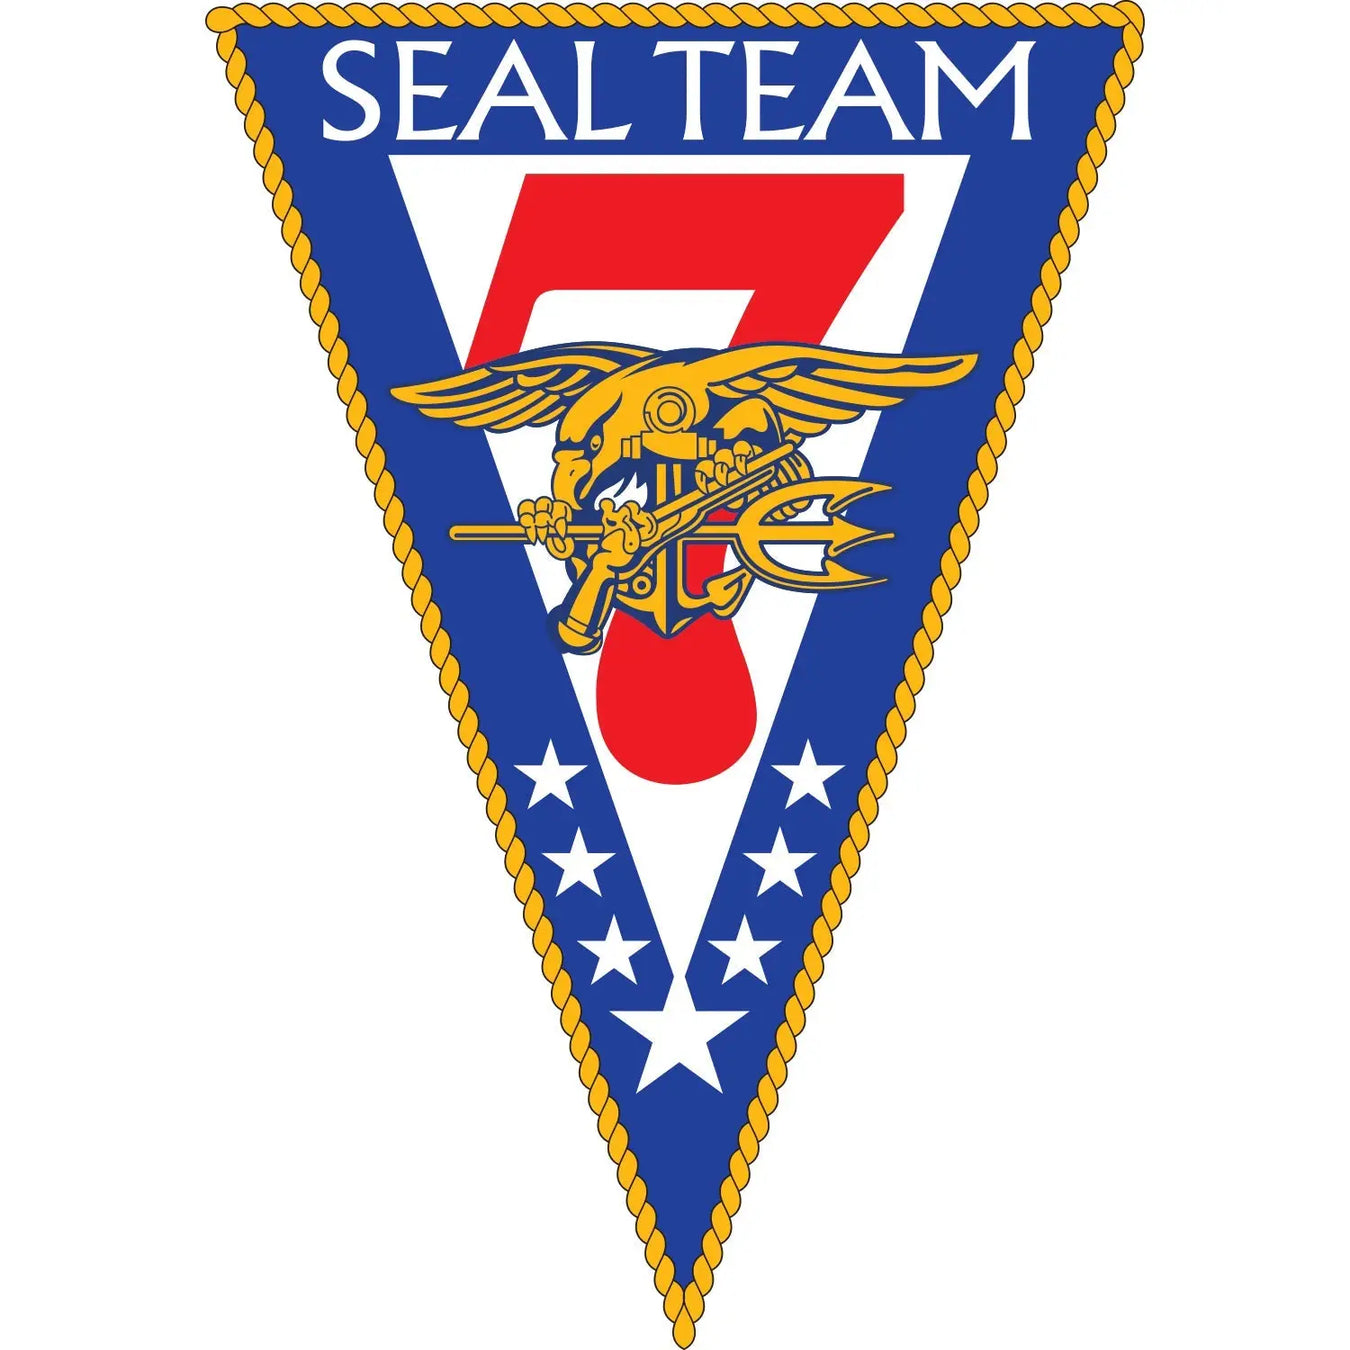 SEAL Team 7 patch logo decal emblem crest insignia